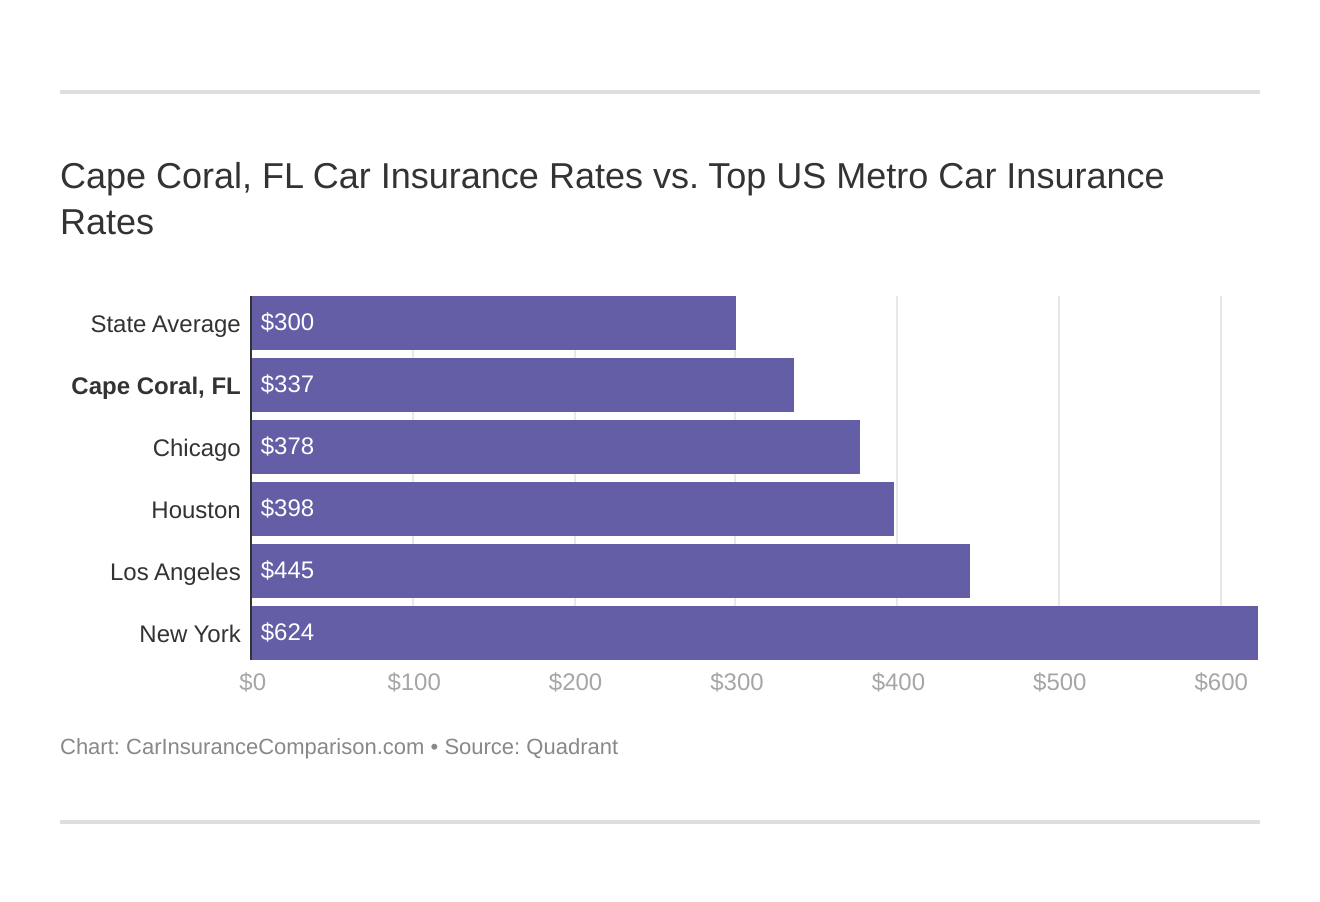 Cape Coral, FL Car Insurance Rates vs. Top US Metro Car Insurance Rates